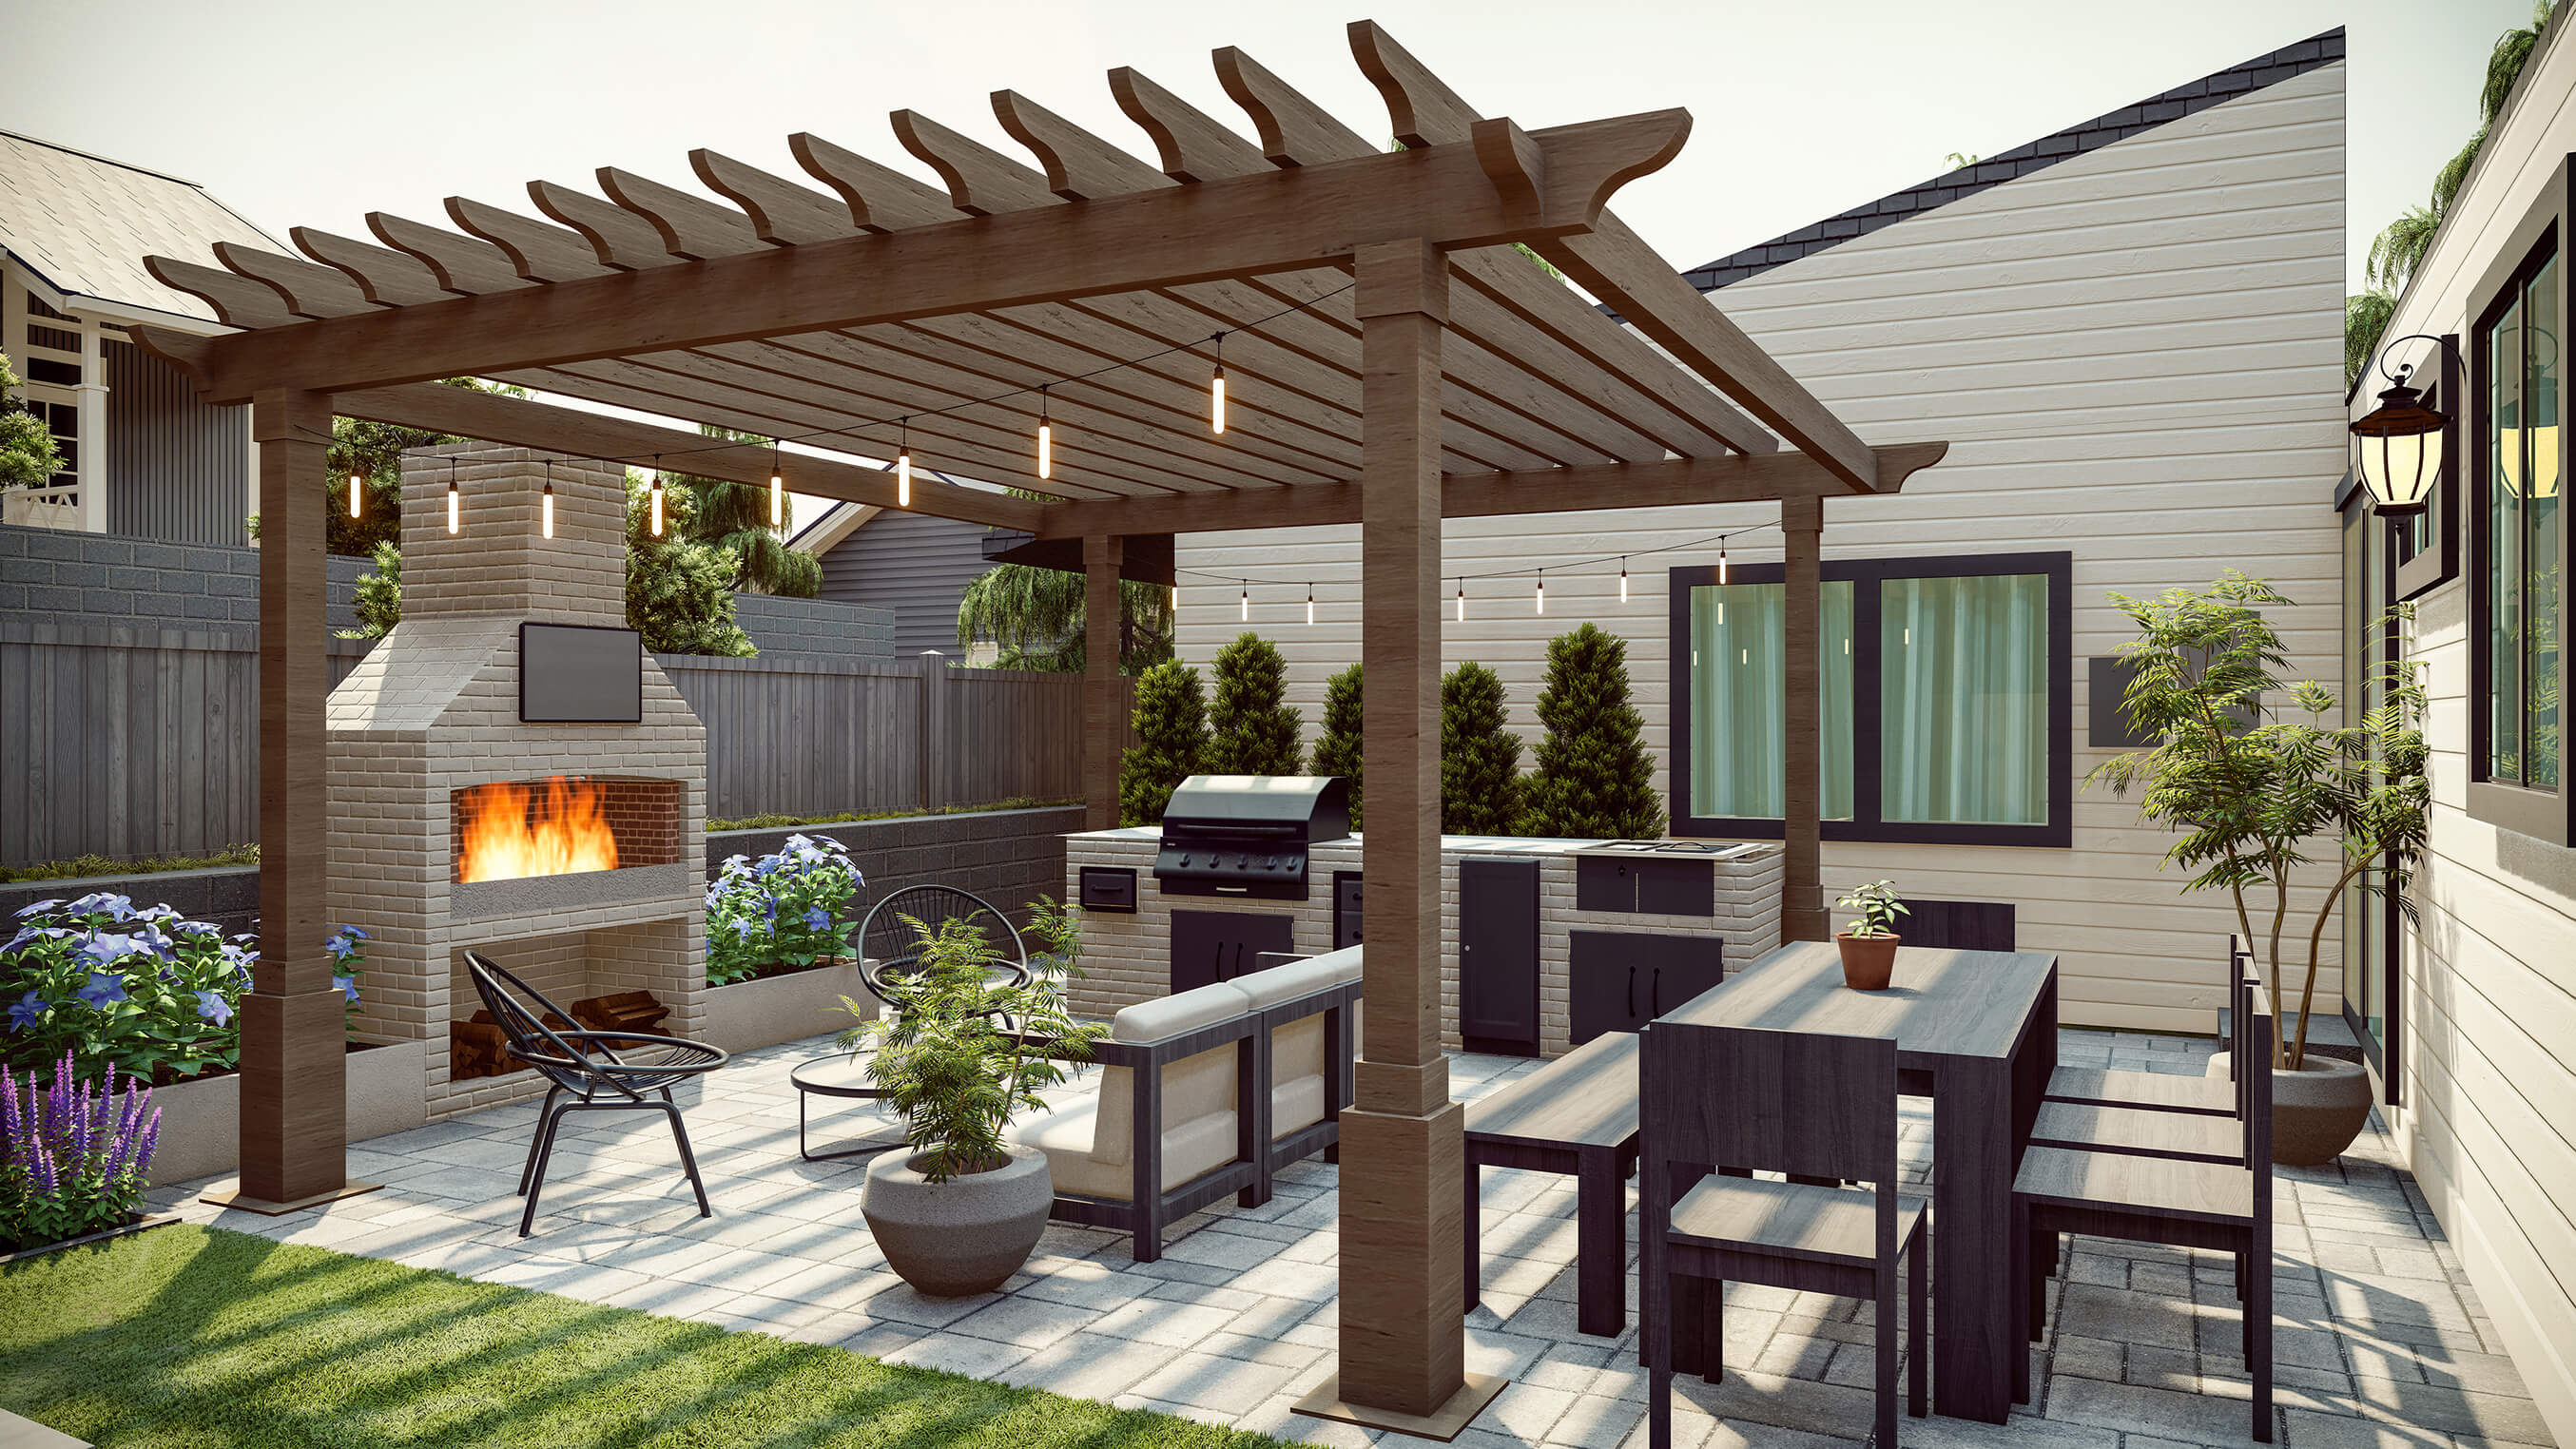 Suburban backyard with pergola and outdoor fireplace